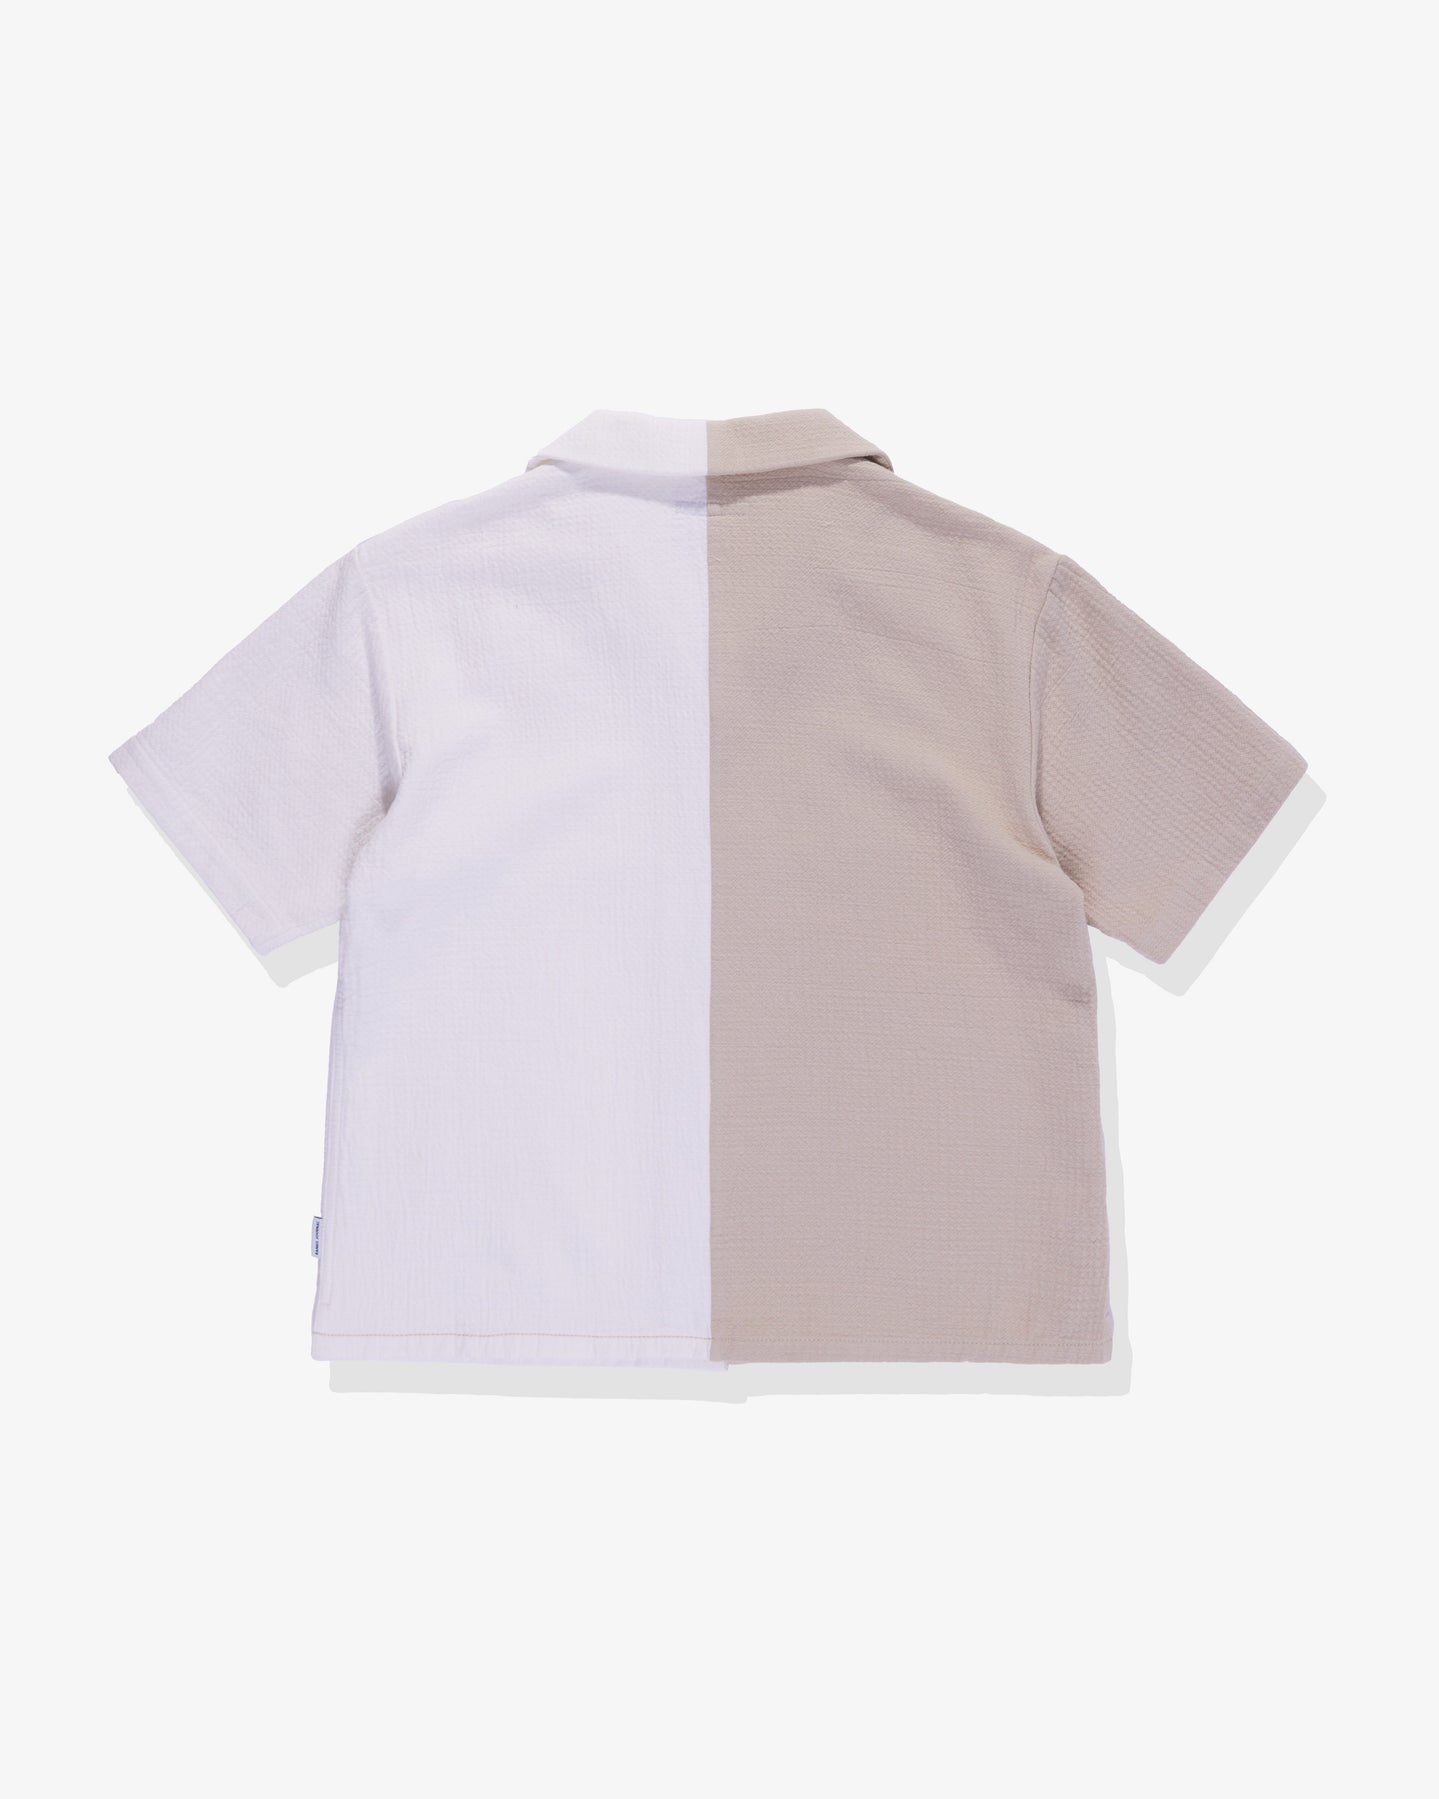 Cleo S/S Woven Shirt